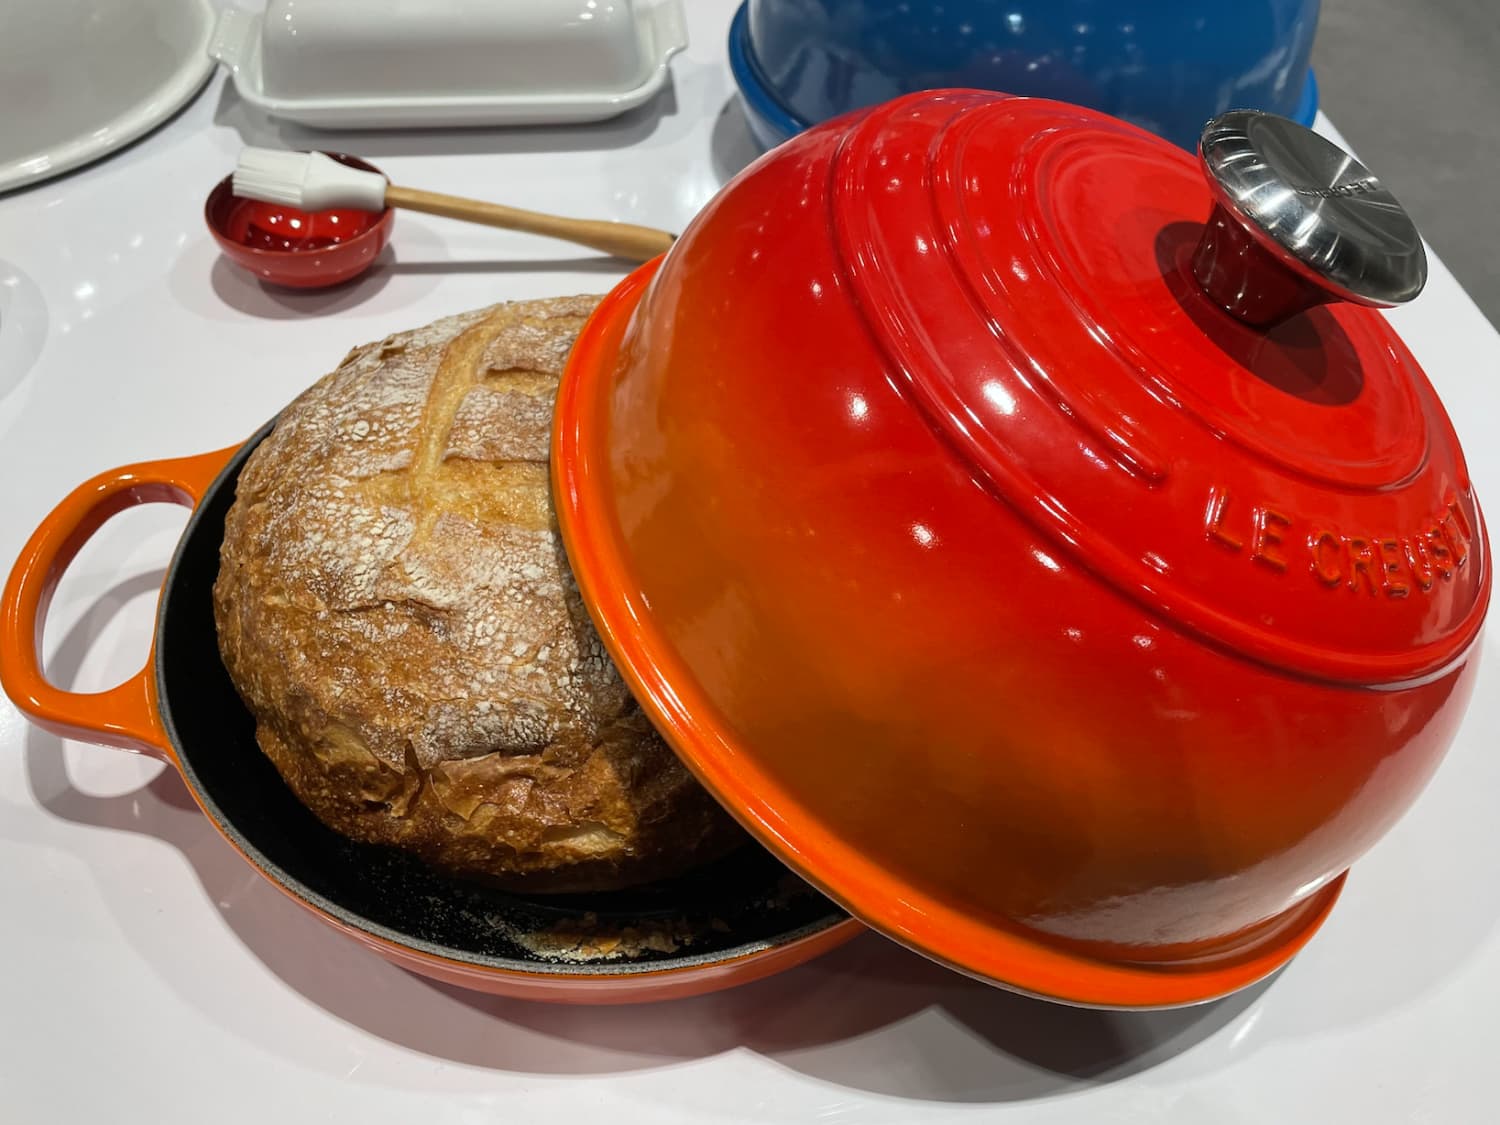 Brace Pjece jury Le Creuset Bread Oven Review 2022 | The Kitchn